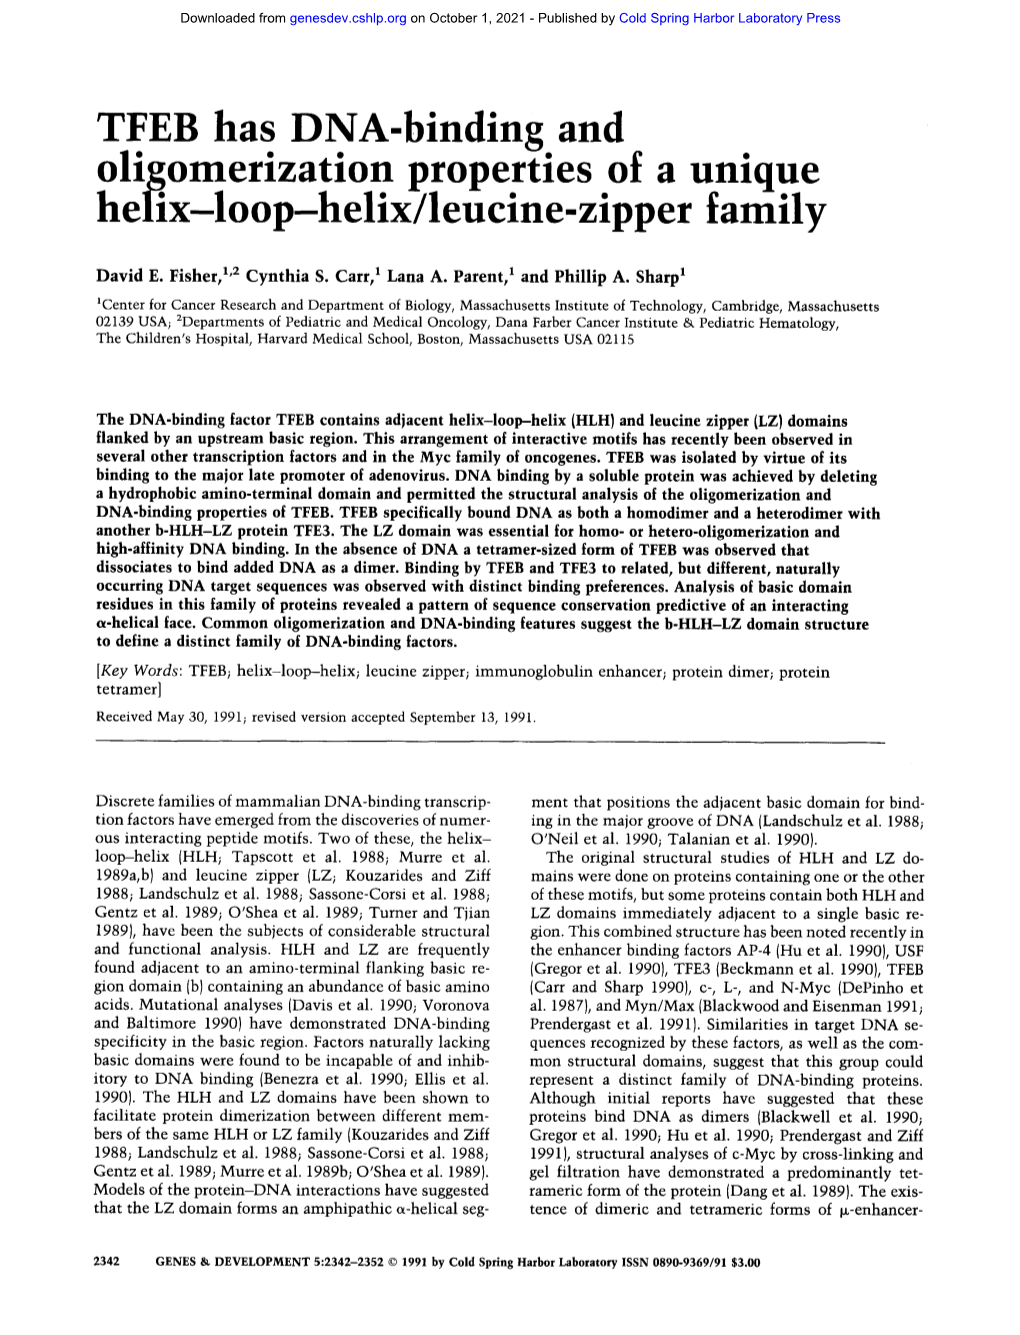 TFEB Has D NA-Binding and Oligomerization Properties of a Unique Helix-Loop-Helix/Leucine-Zipper Family